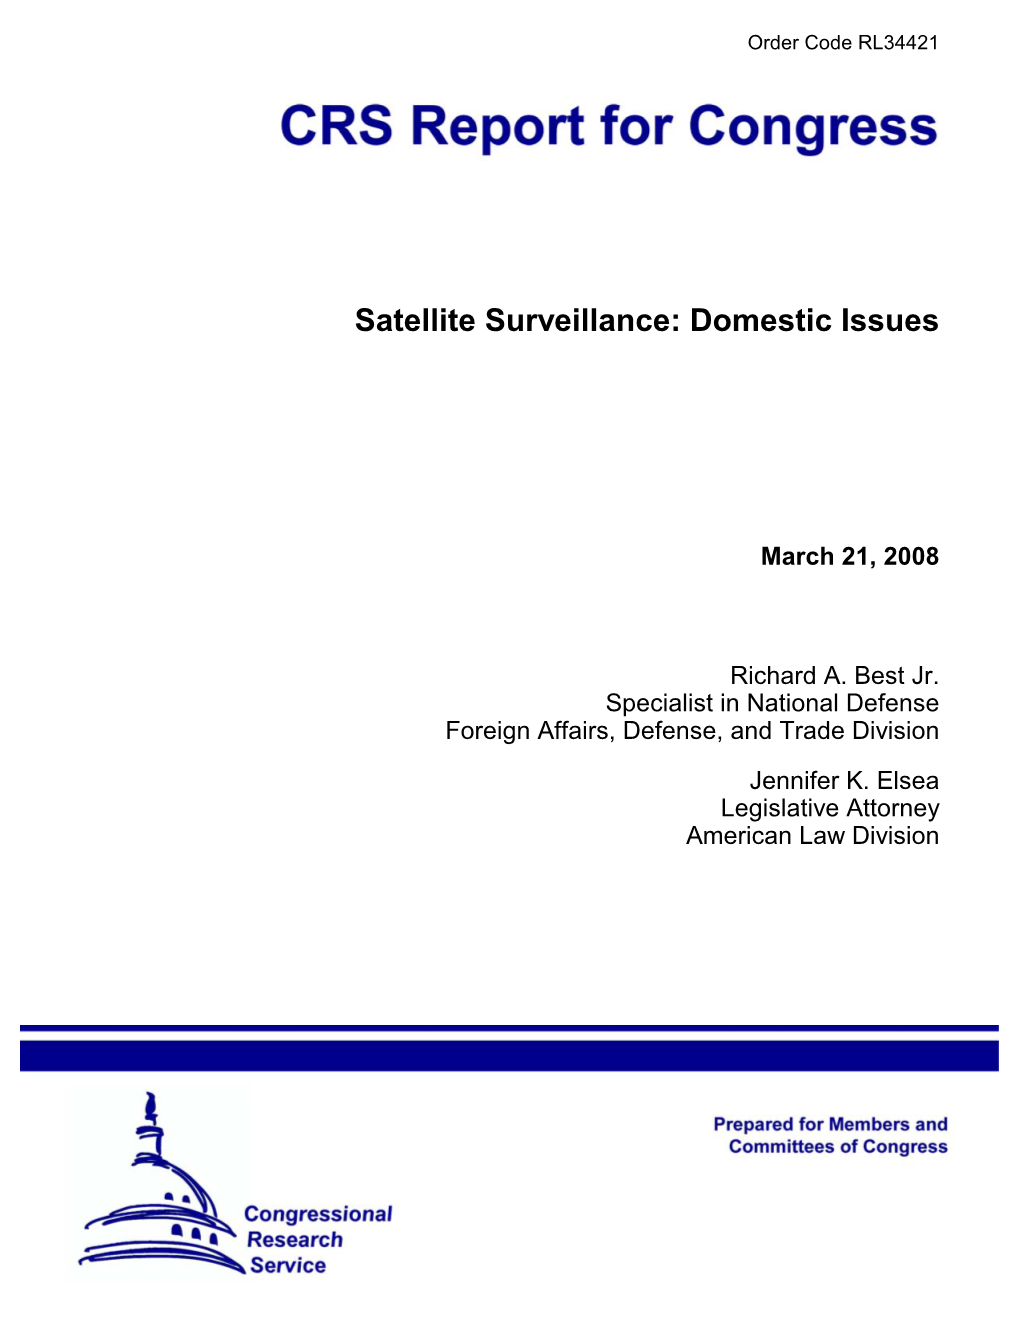 Satellite Surveillance: Domestic Issues